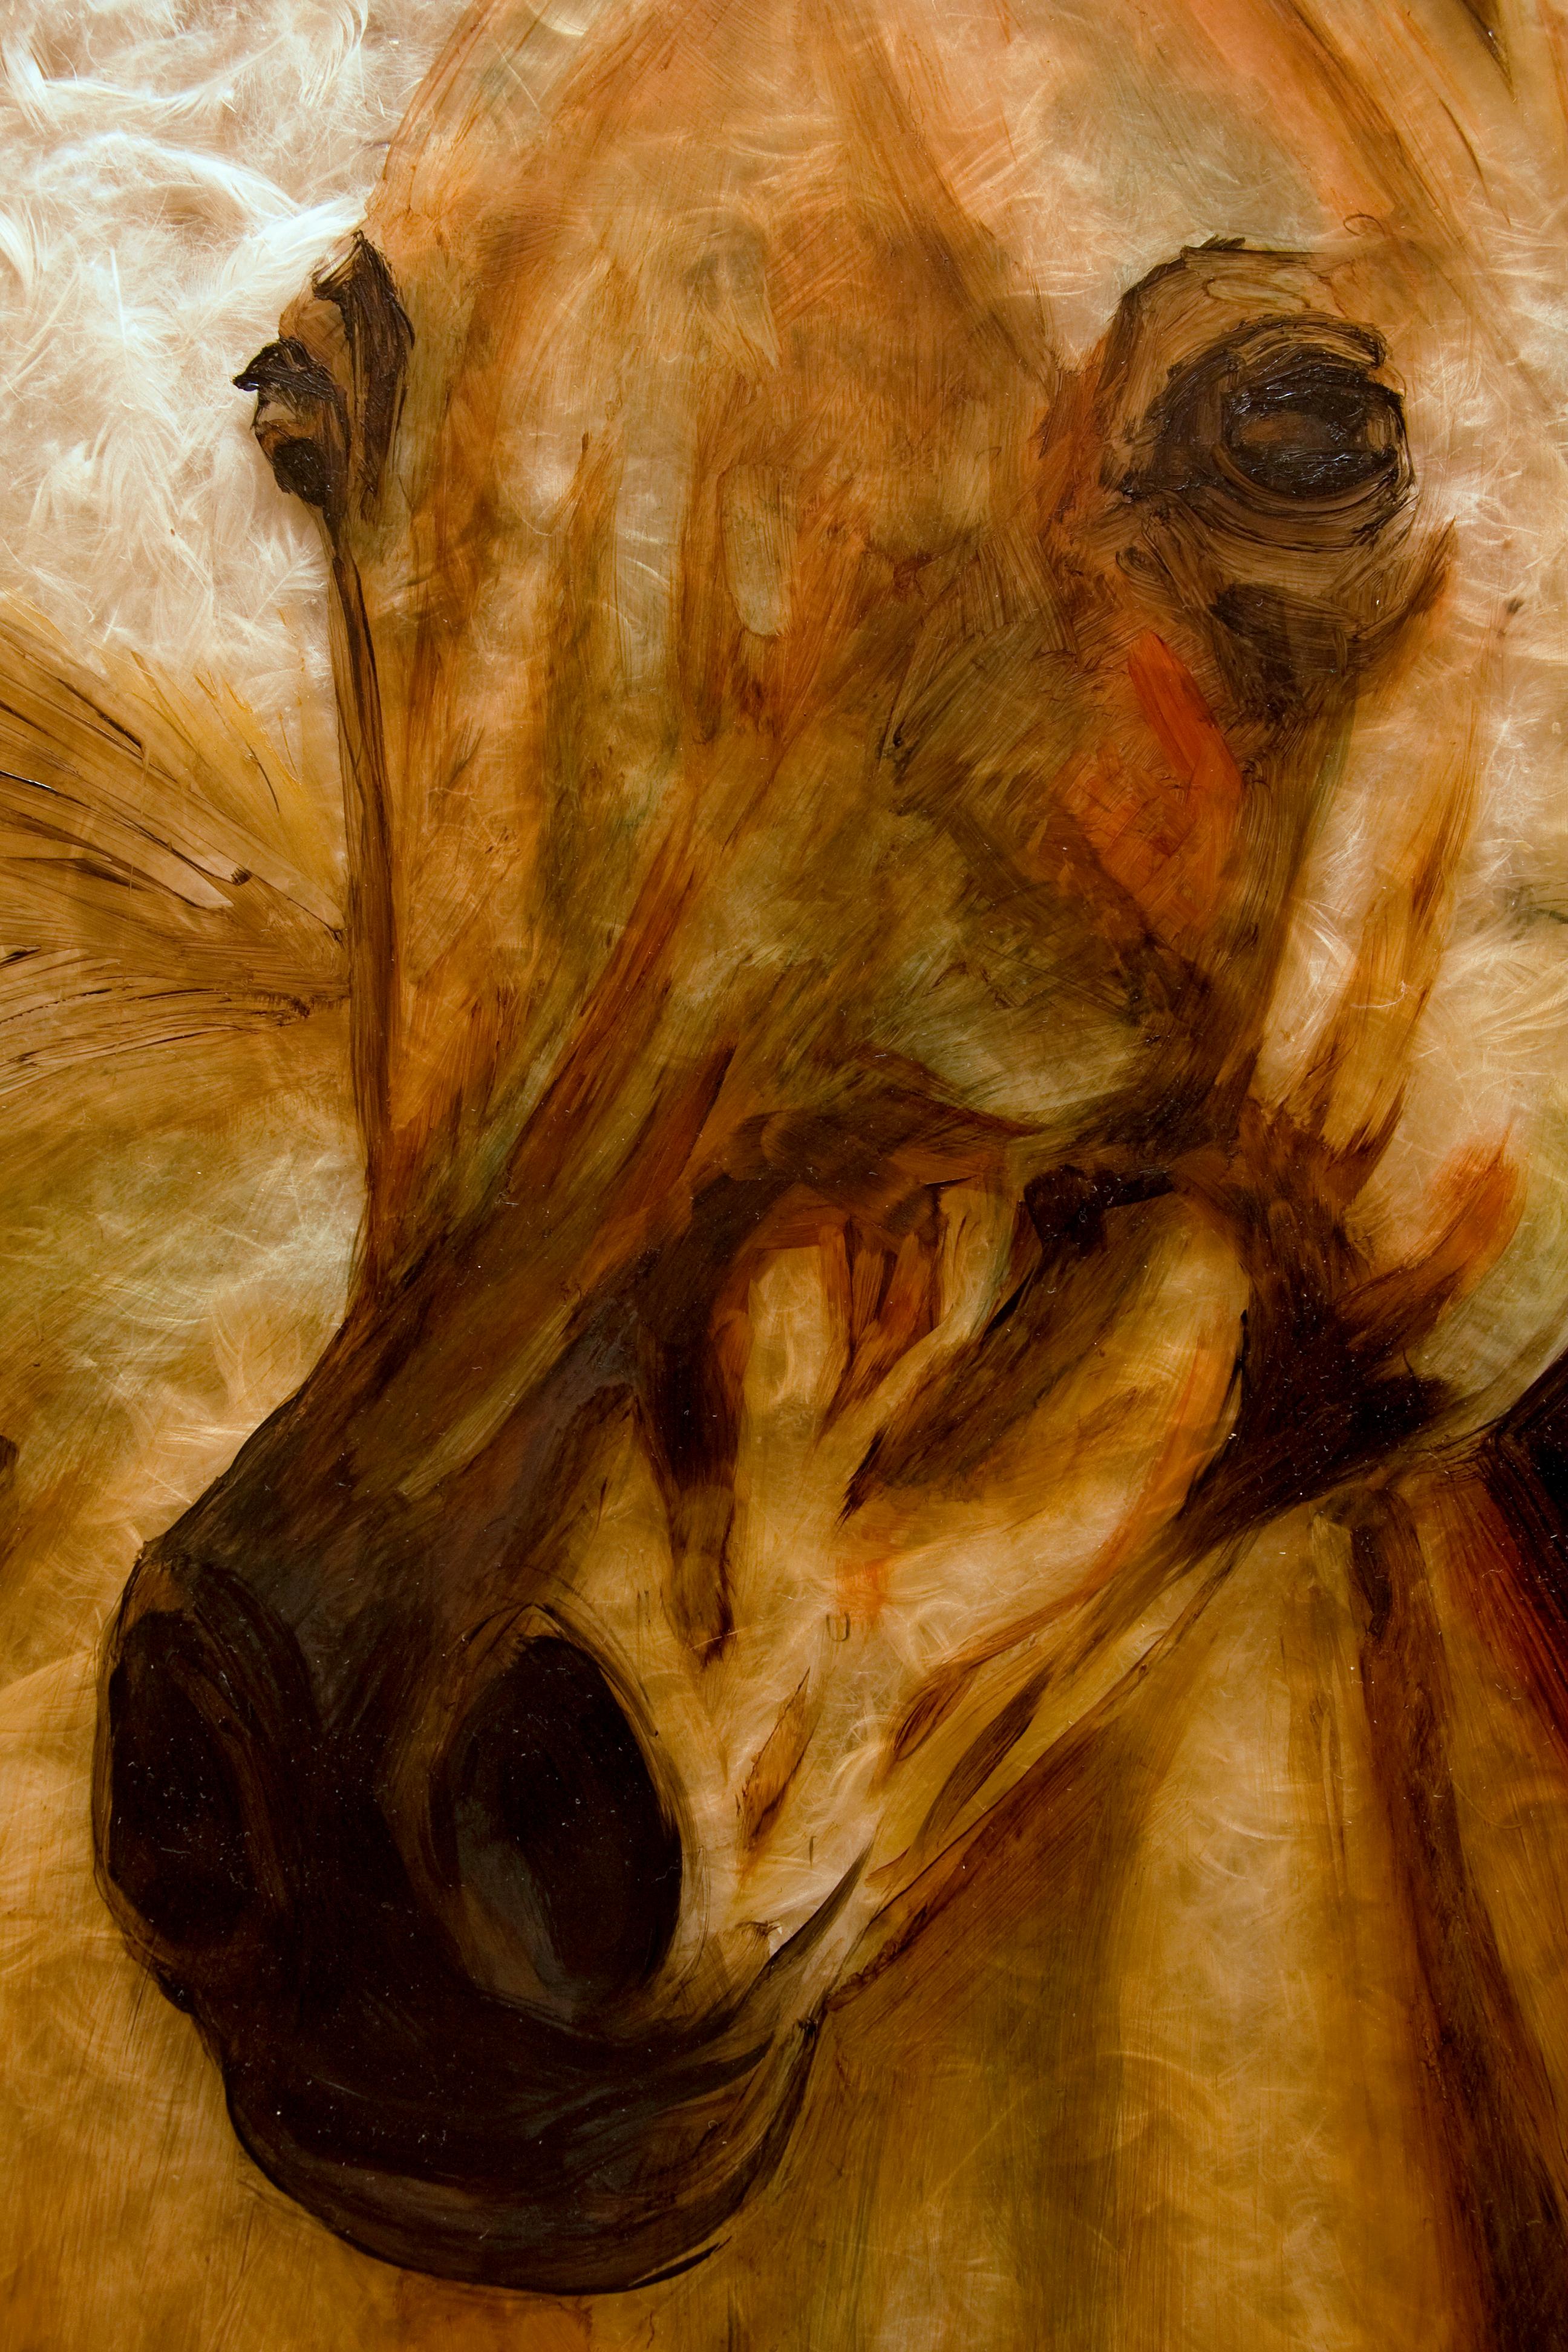 Cheval narratif : Arabian (cheval à plumes) - Contemporain Mixed Media Art par Craig Alan